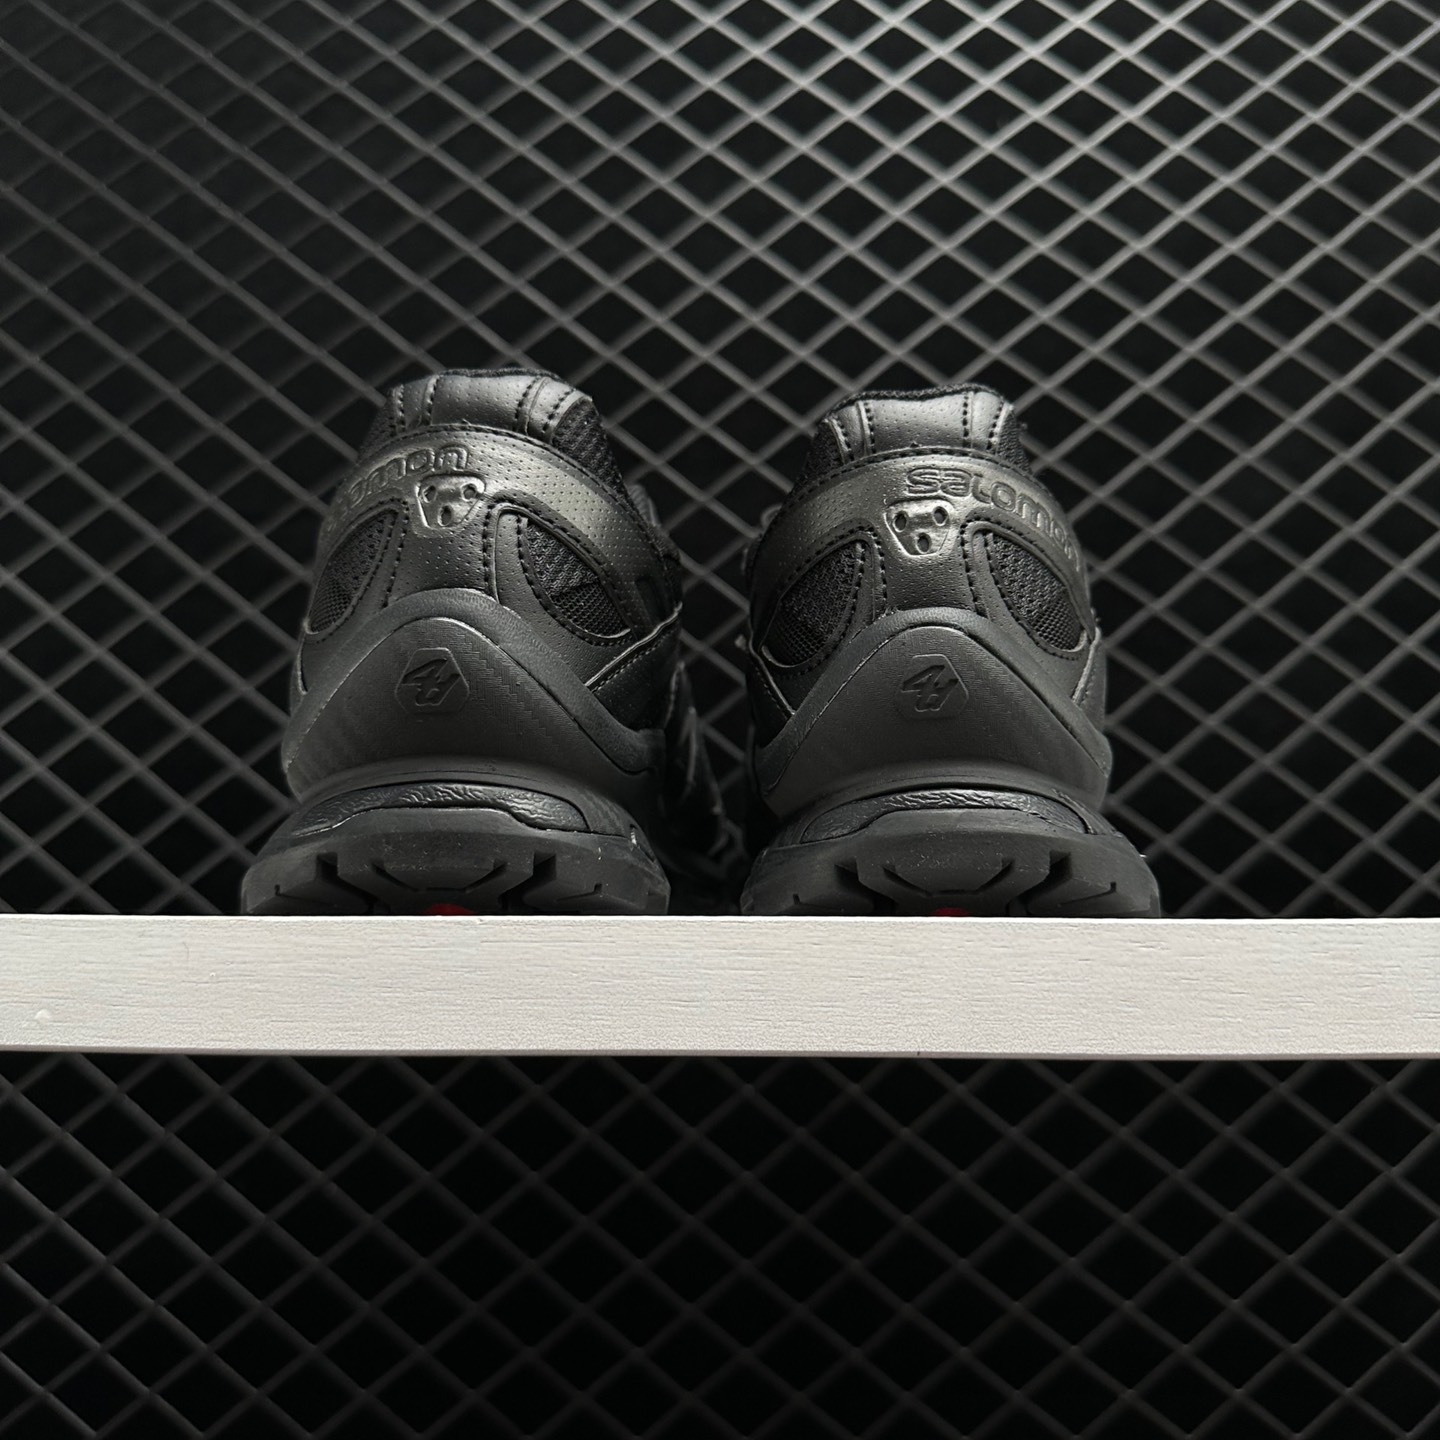 Salomon XT-Quest Black: High-performance Trail Running Shoes